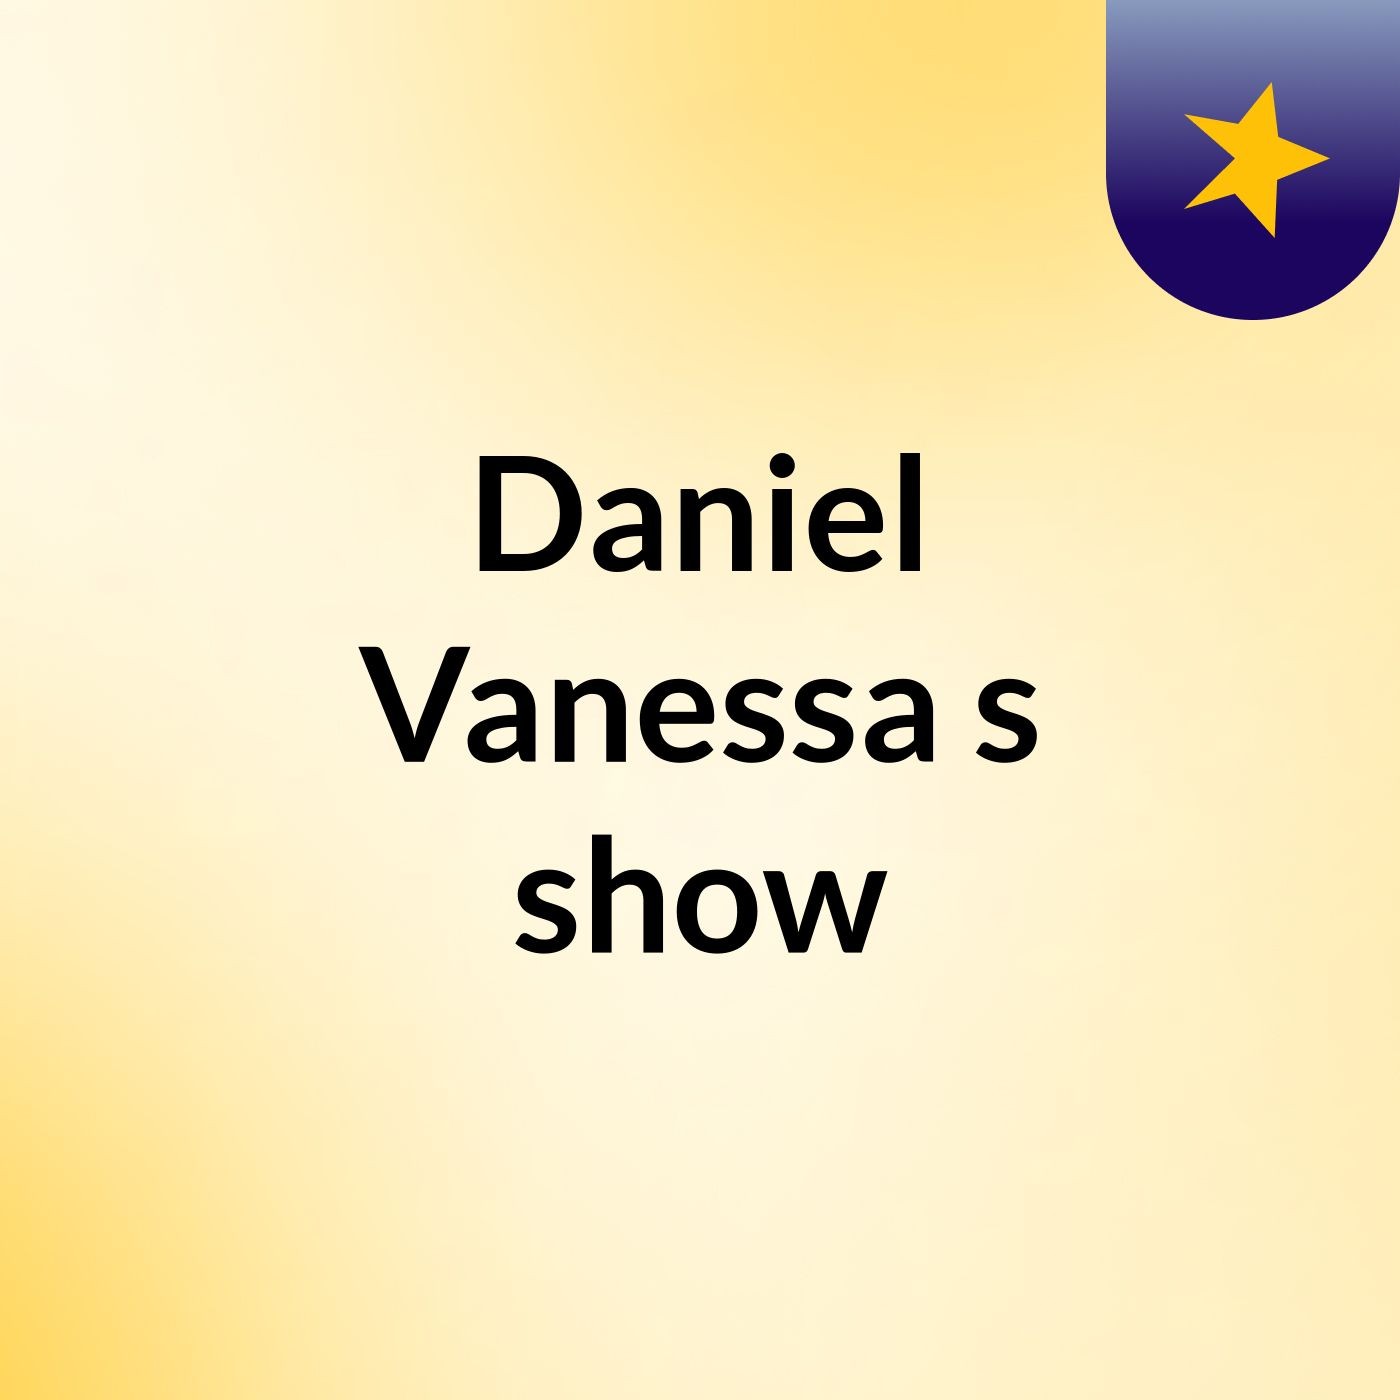 Daniel Vanessa's show